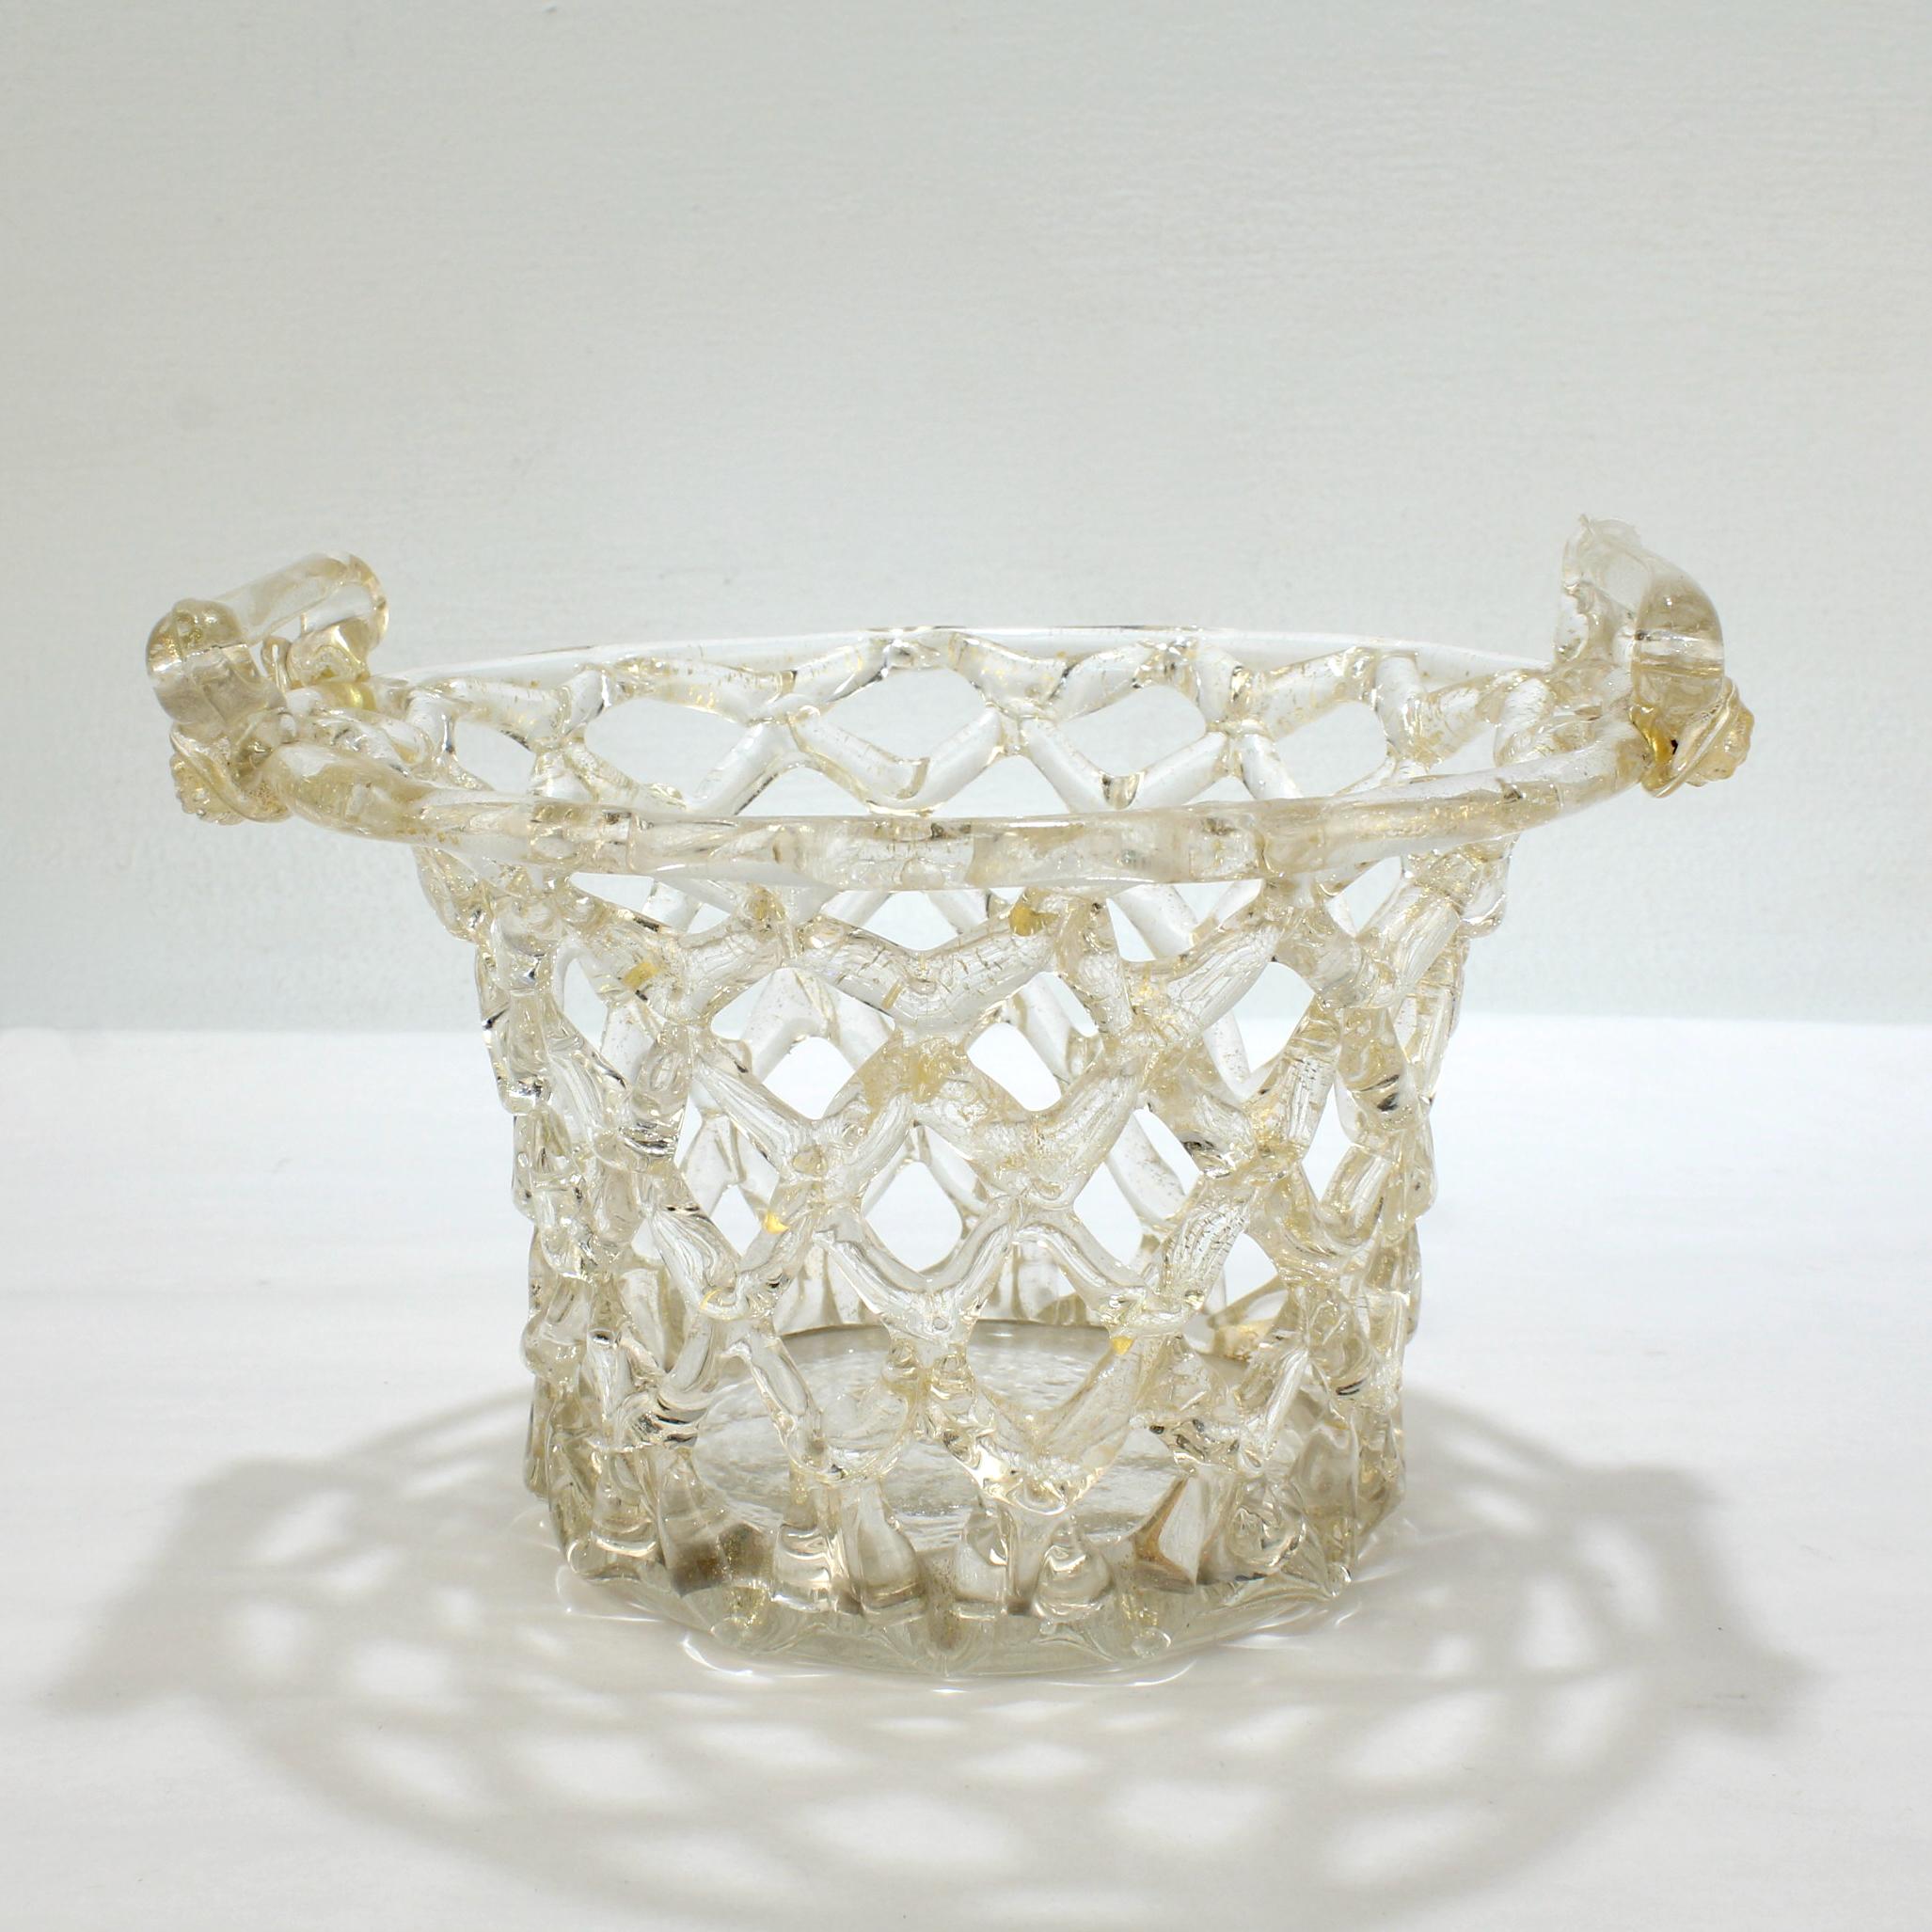 Italian Venetian or Murano Glass Liege a Traforato Openwork Basket with Gold Foil